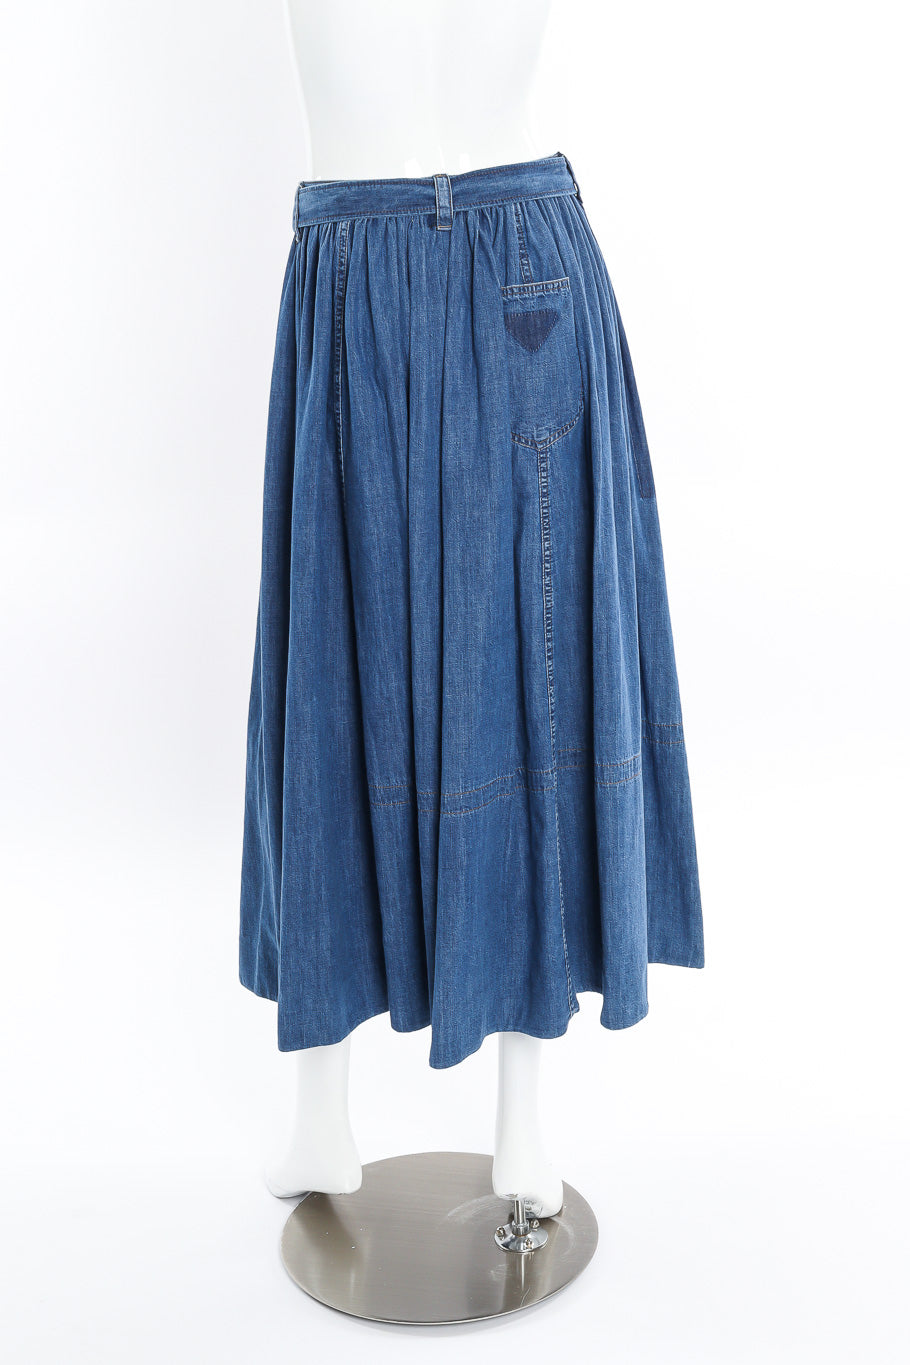 Prada denim peasant skirt back view on mannequin @recessla